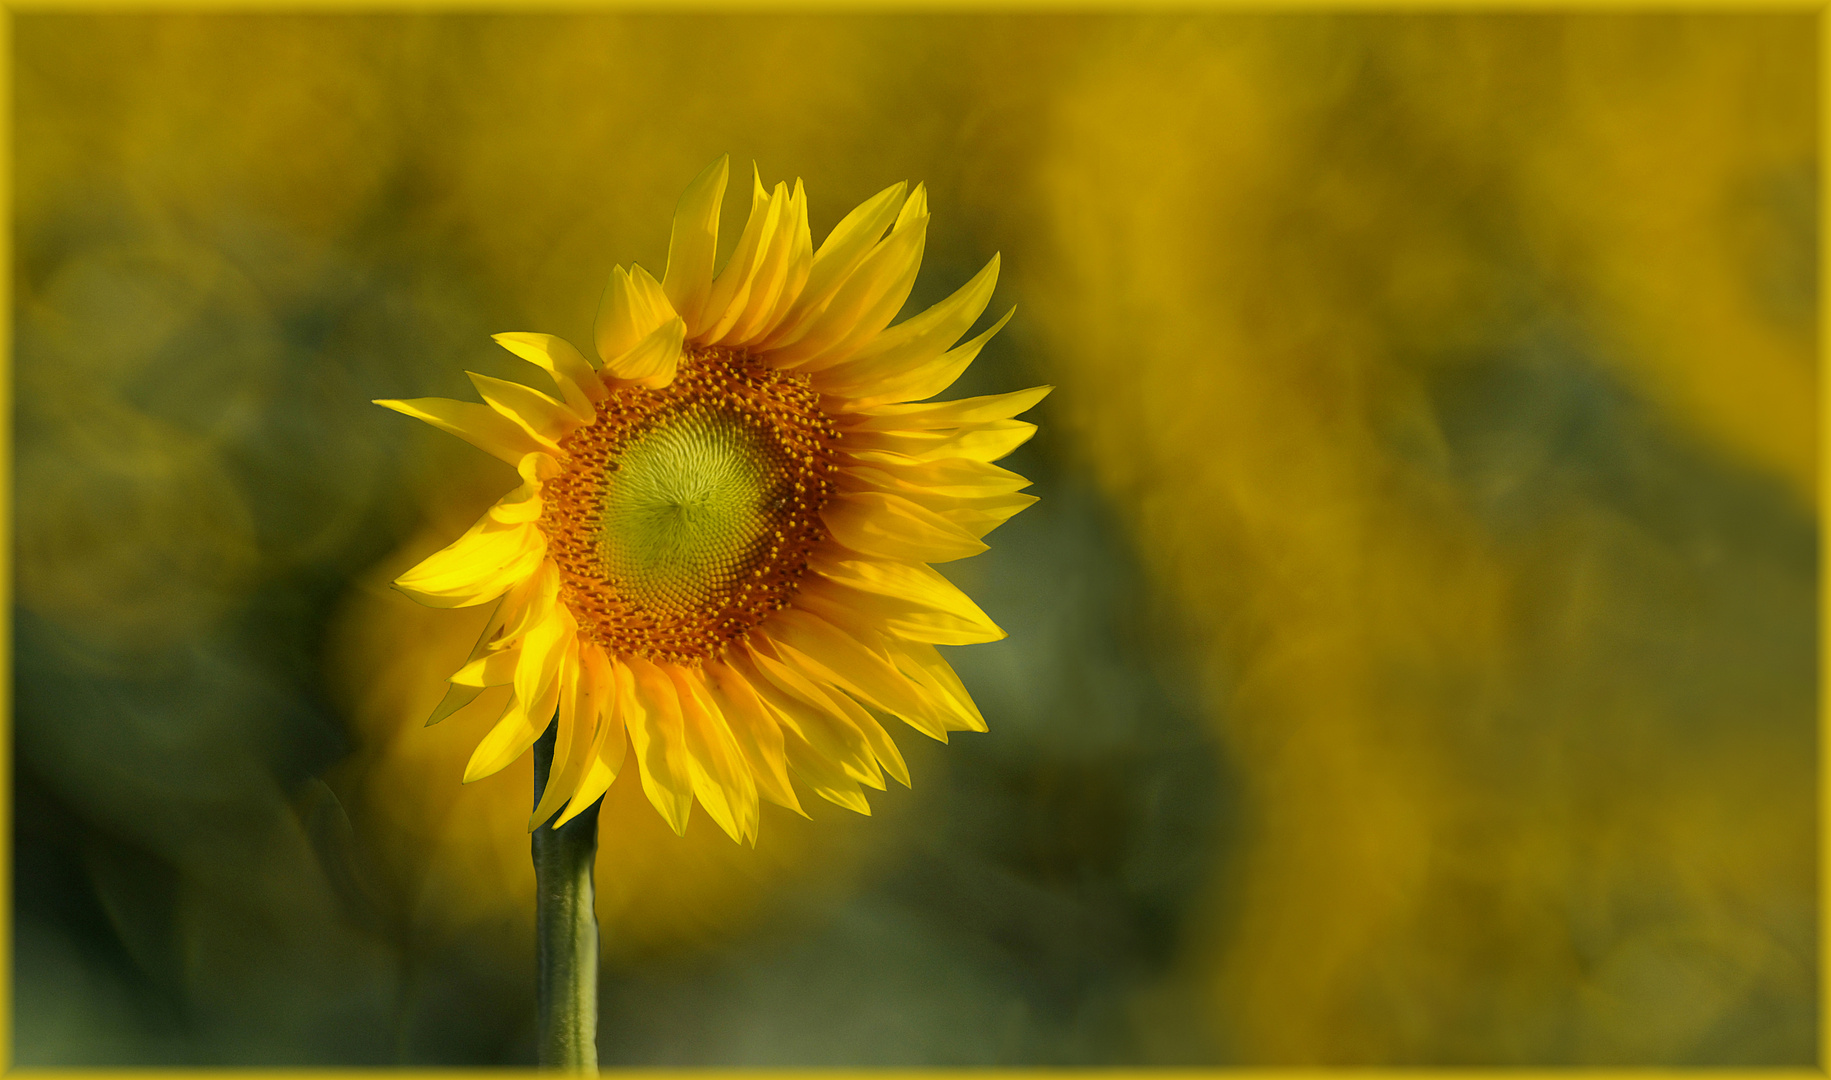 Sonnenblume im alternativen Schnitt